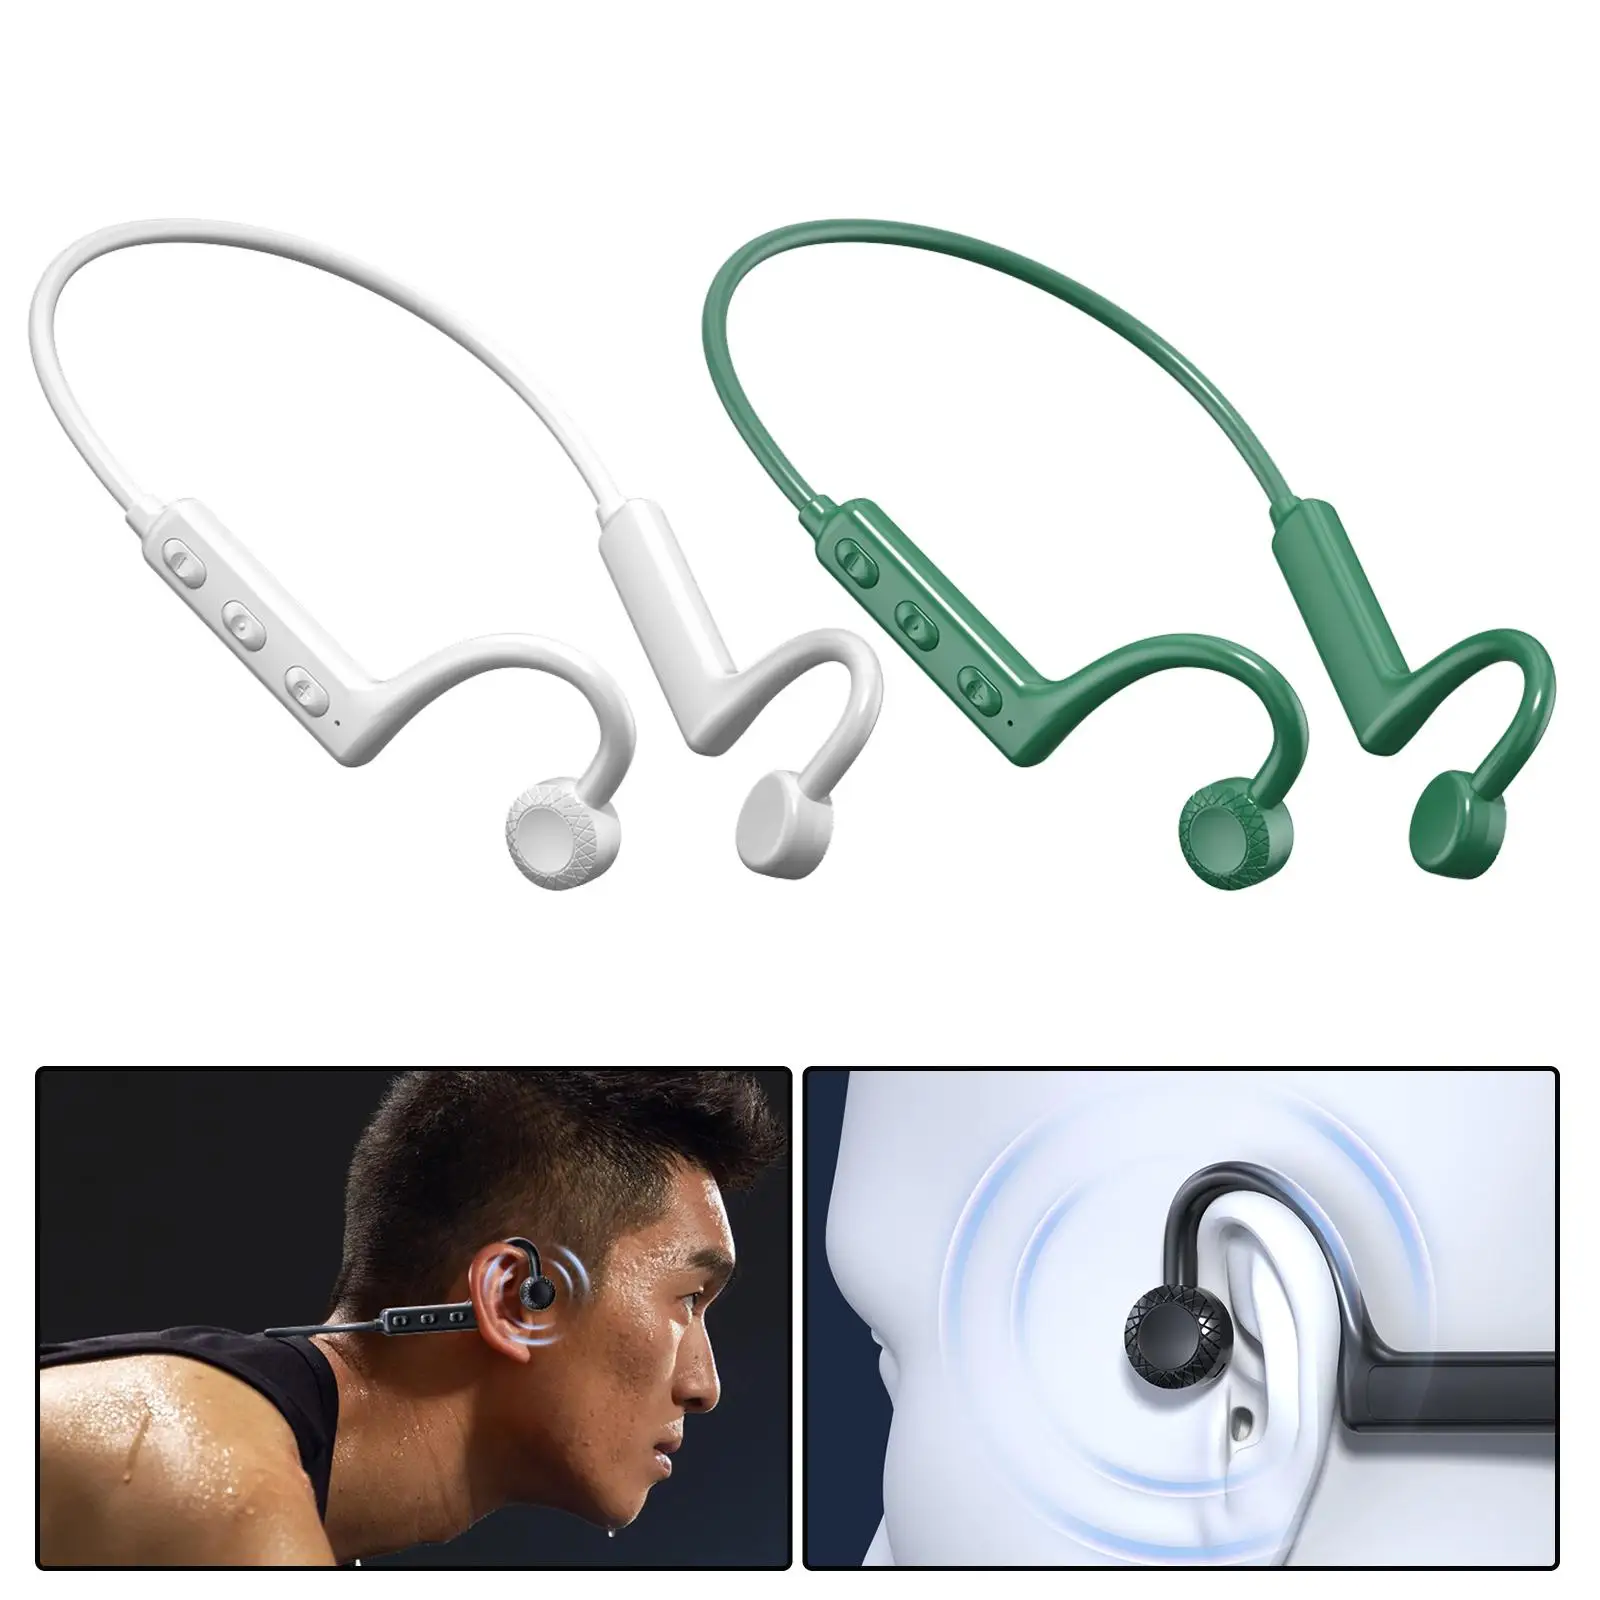 Wireless Bone Conduction Headphones Lightweight IPX5 Waterproof with Mic Open Ear Headset for Running Sports Hiking Workout